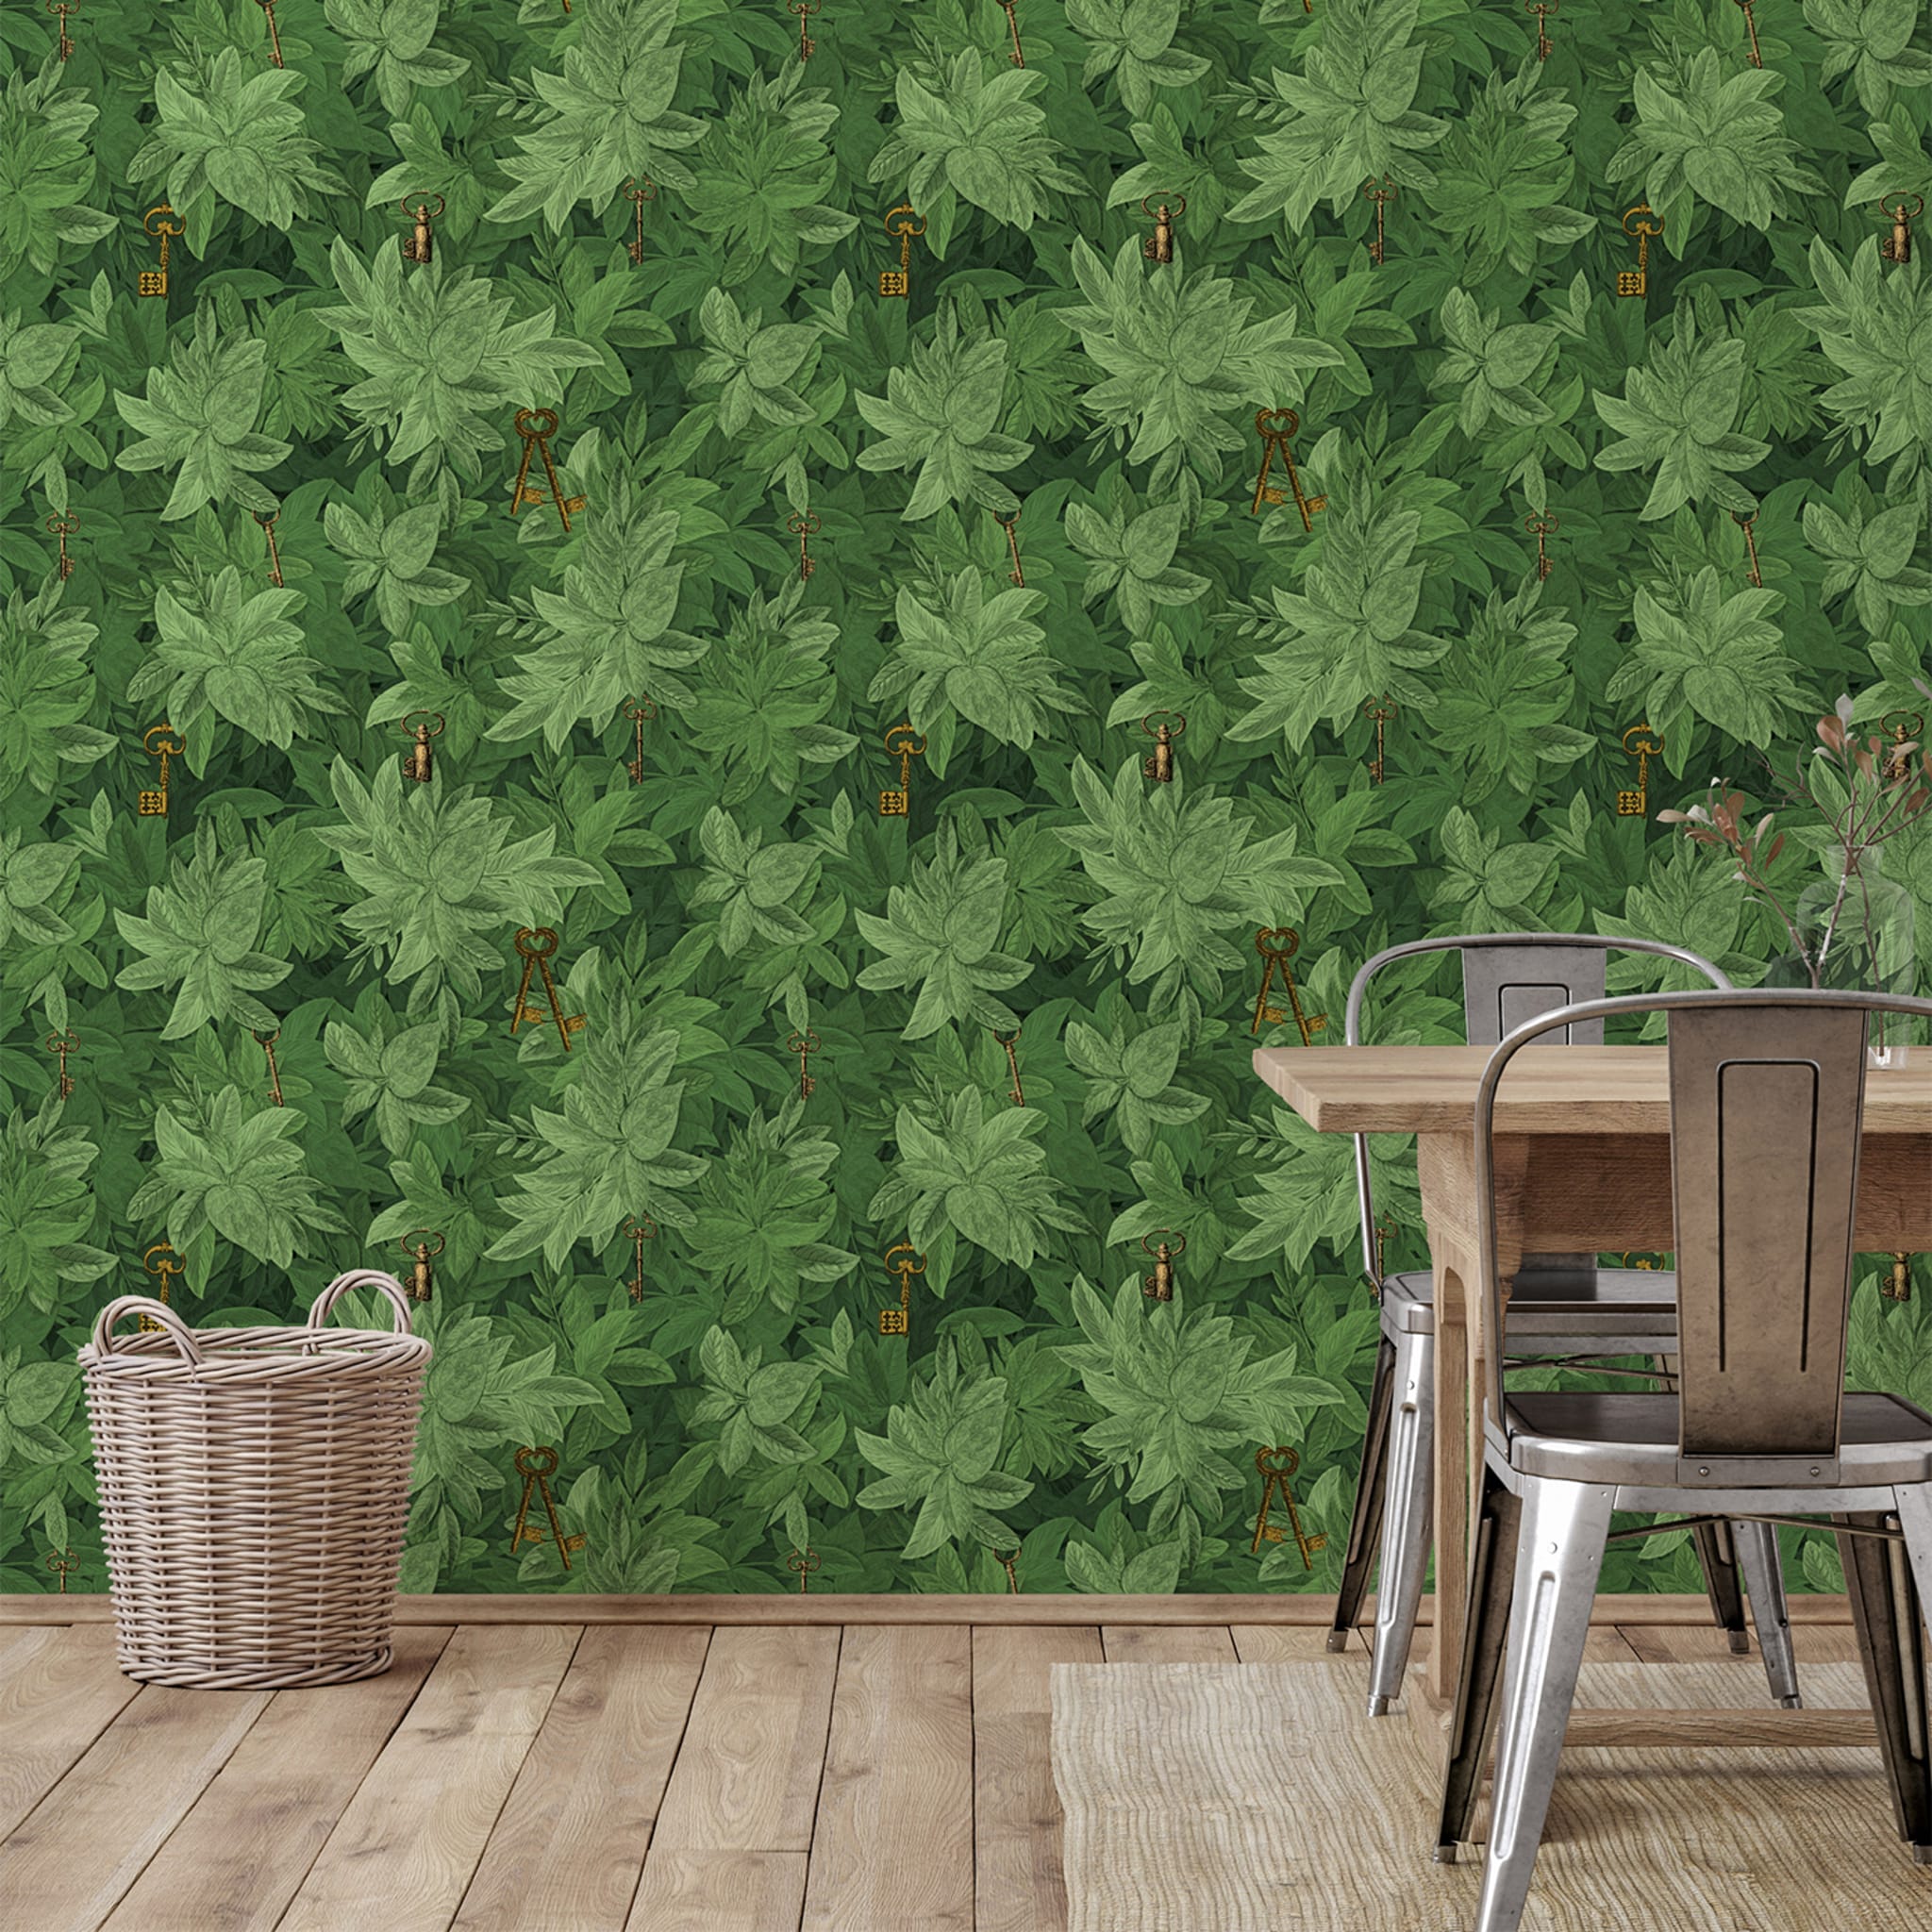 Green Ivy Leaves Wallpaper - Alternative view 3